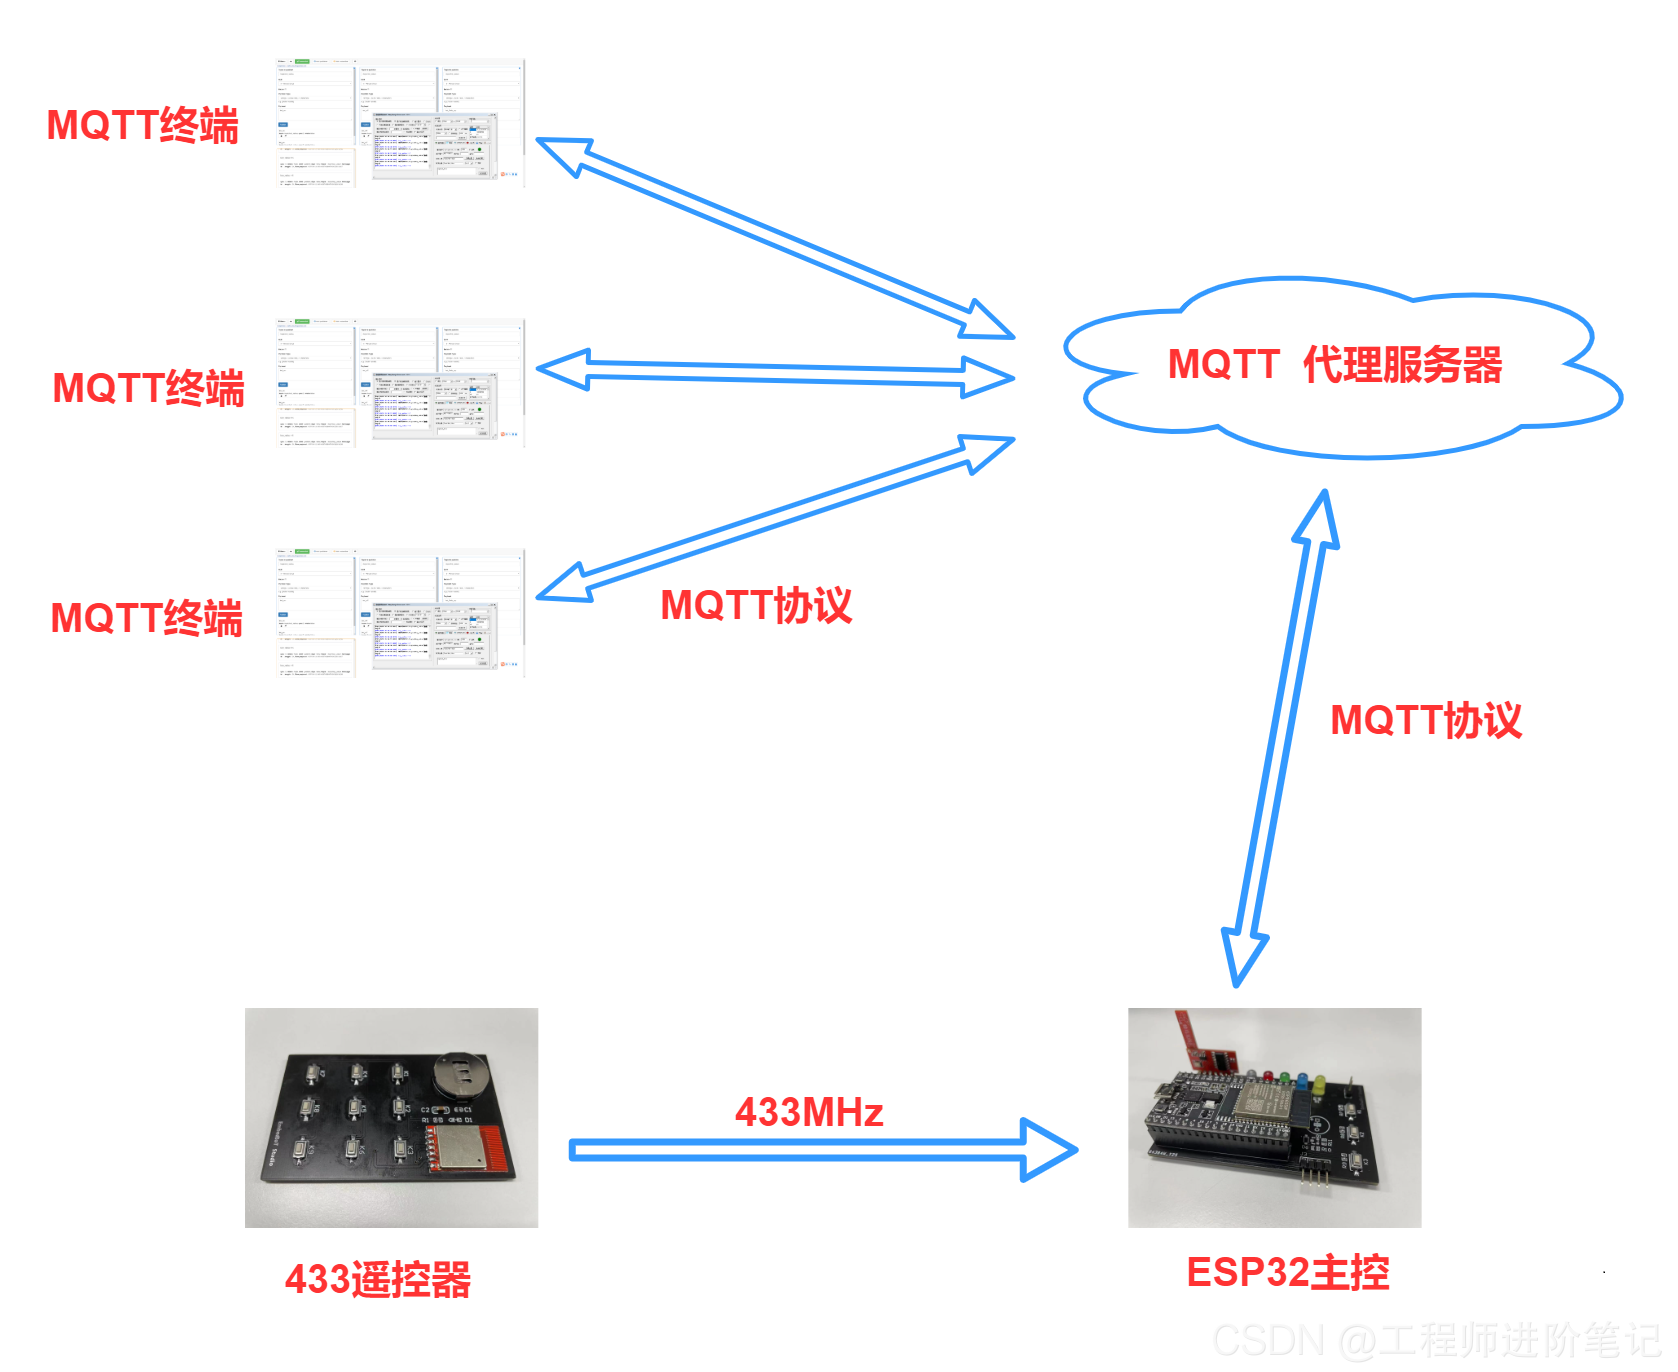 ESP32应用案例 -- 低功耗433遥控器通过MQTT上报键值